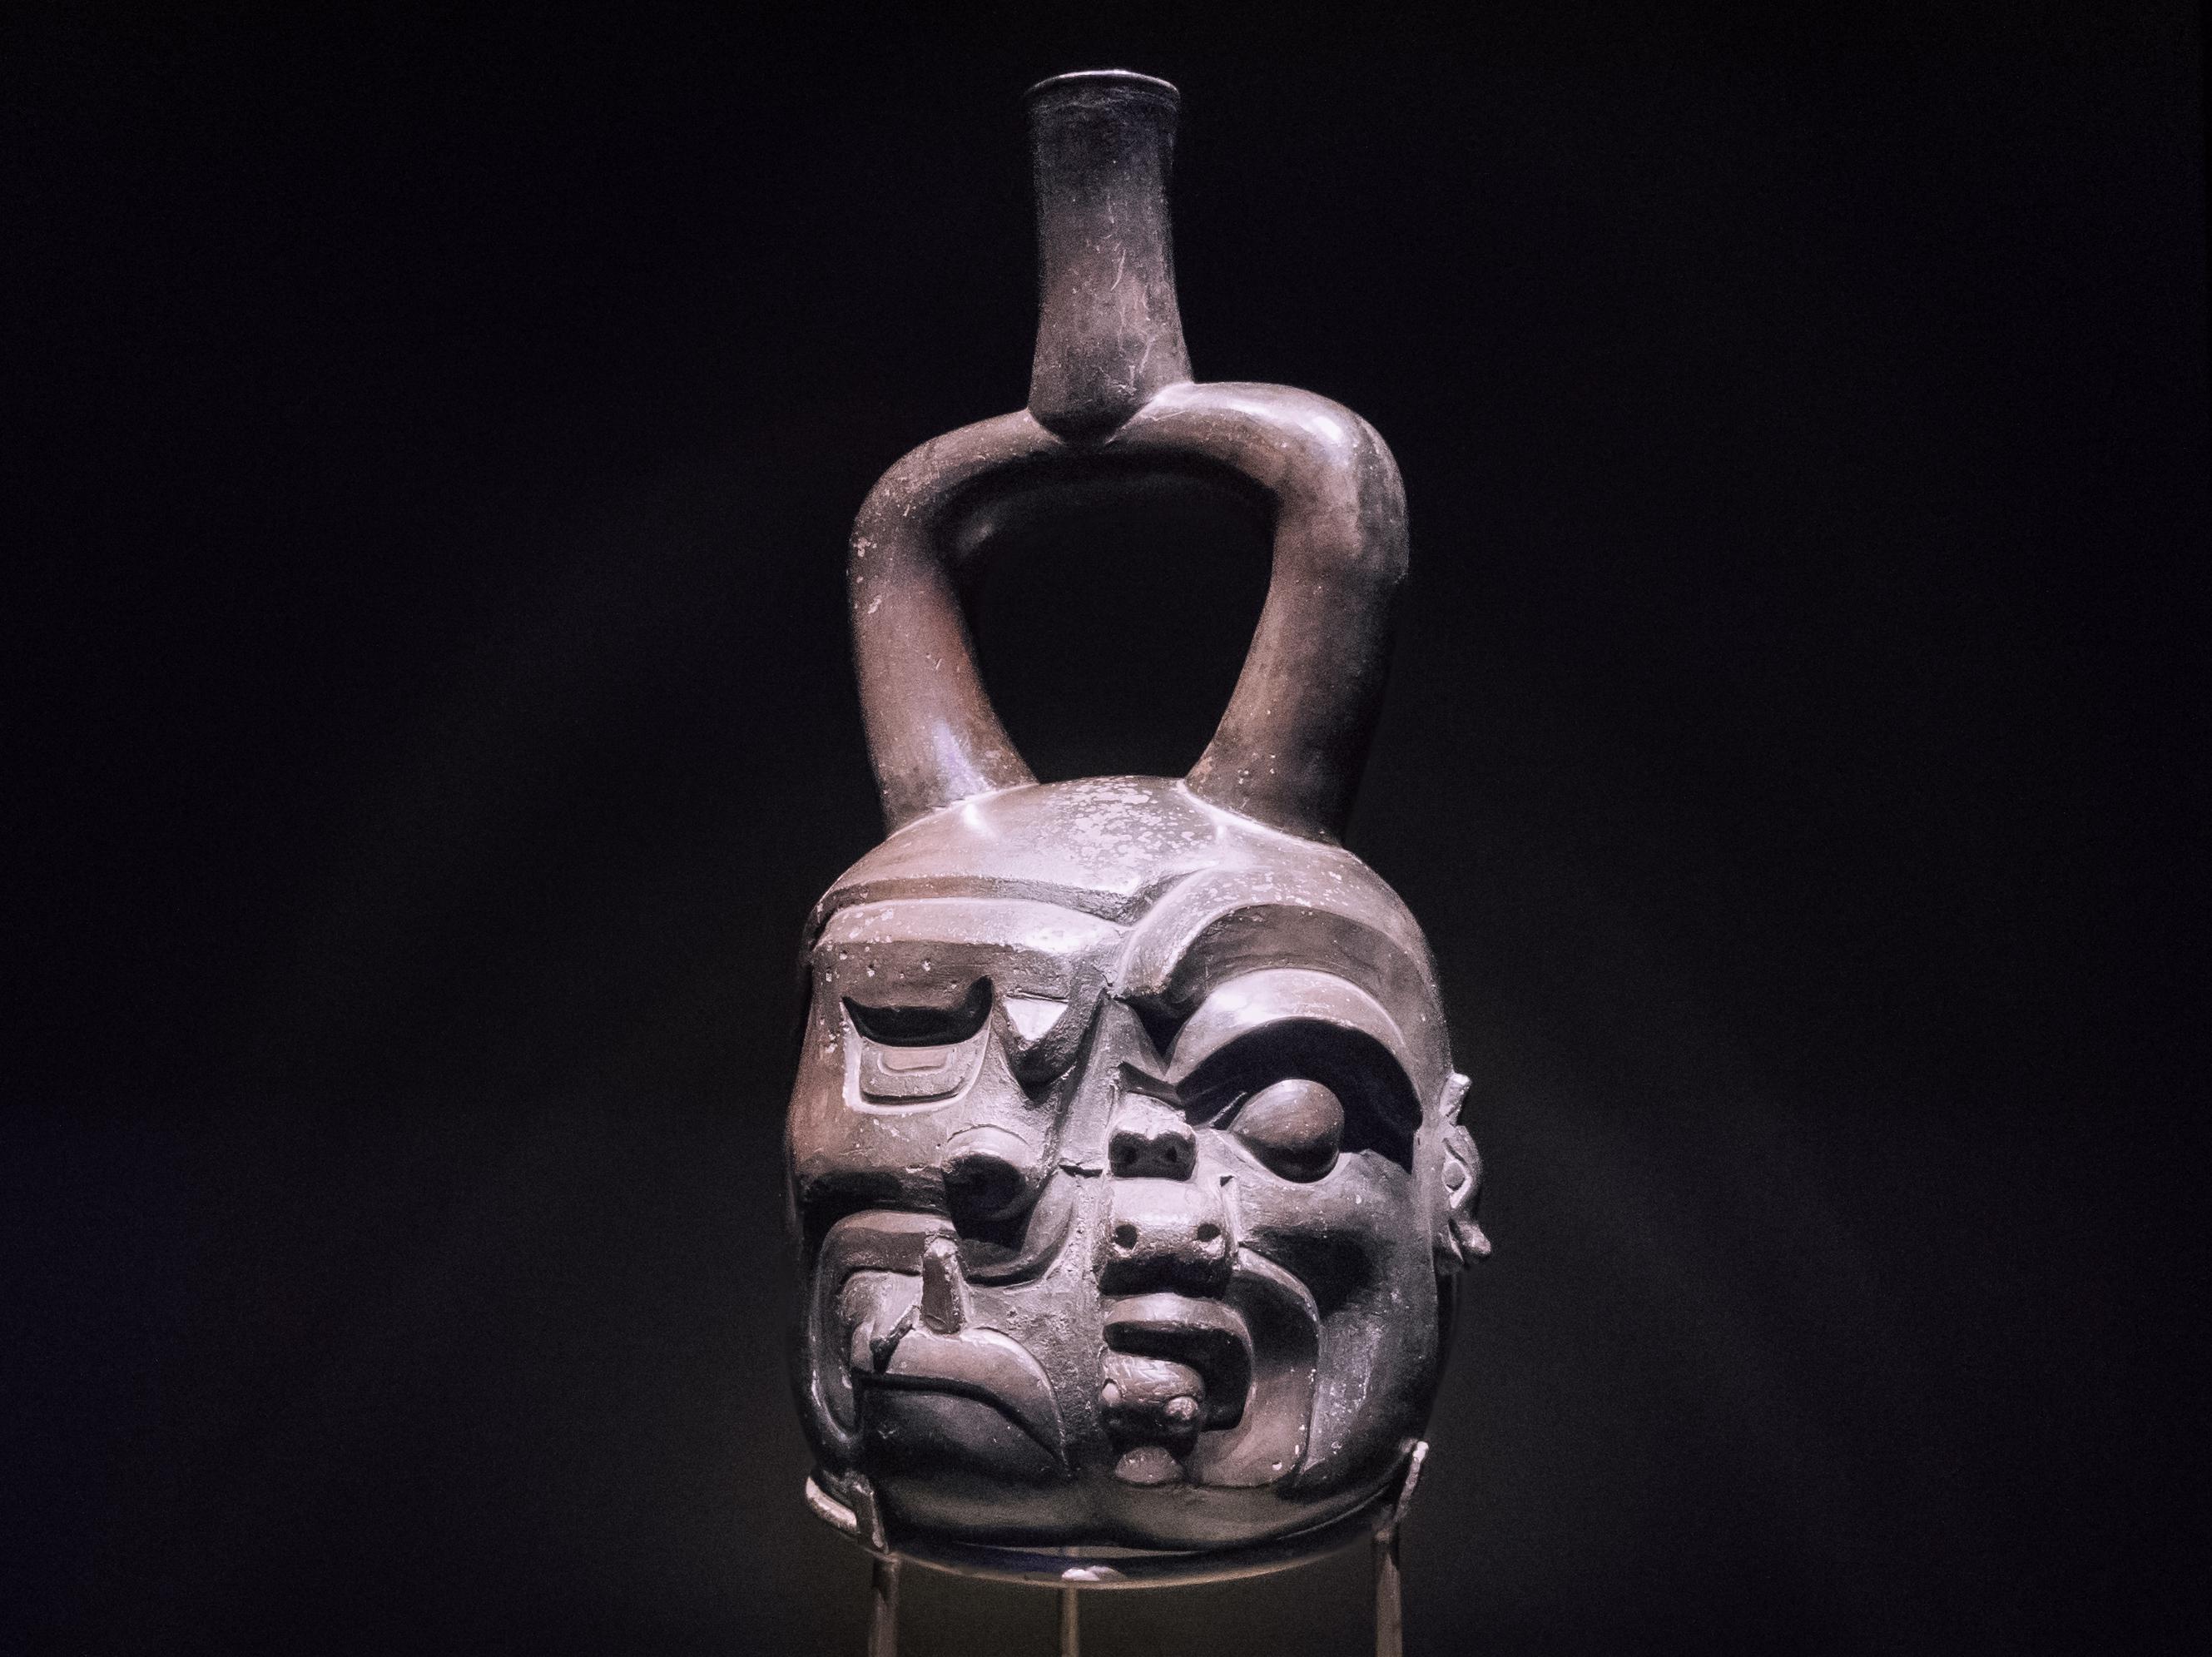 A Shaman in the middle of transformation  into a jaguar. Cupisnique culture (1.250-100 BCE), ceramic stirrup-spout bottle, Larco Museum, Lima.jpg